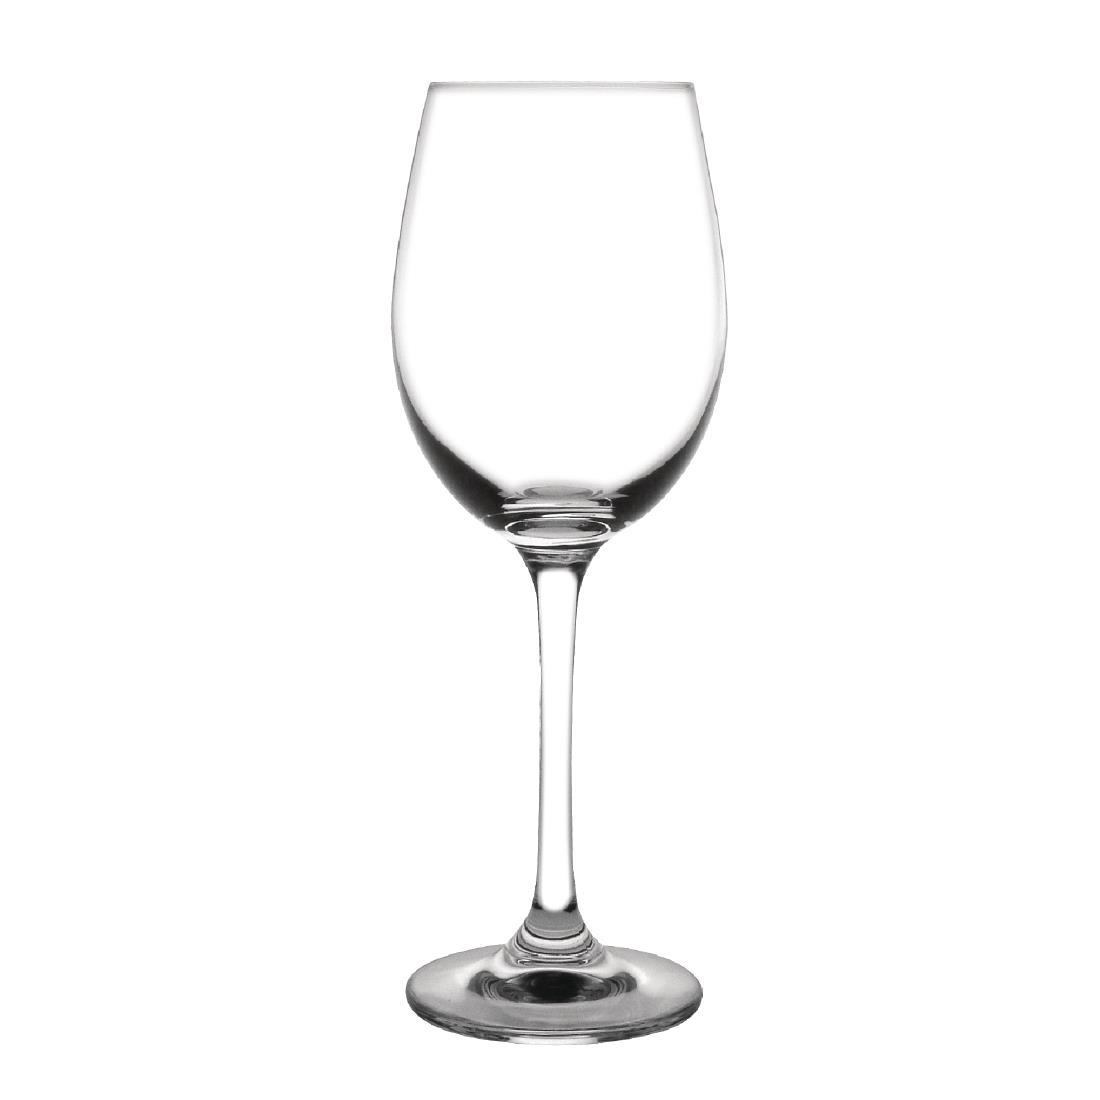 Olympia Modale Crystal Wine Glasses 320ml (Pack of 6) - GF726  - 1